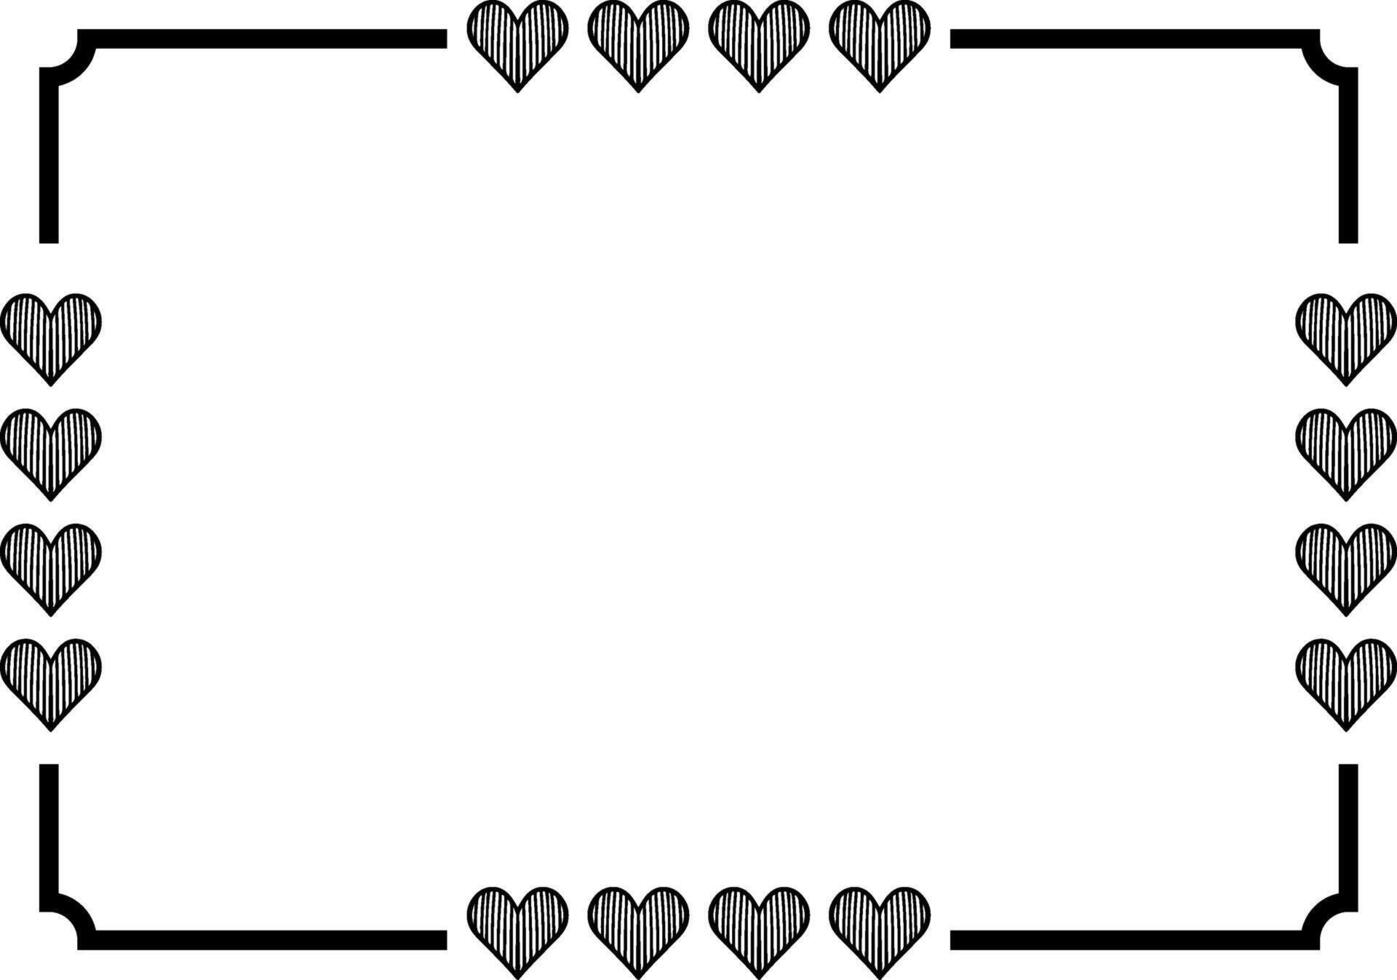 Hand drawn black lines art simple Horizontal heart shape border frame set. Doodle sketch style decorative element vector for banner, poster, wedding